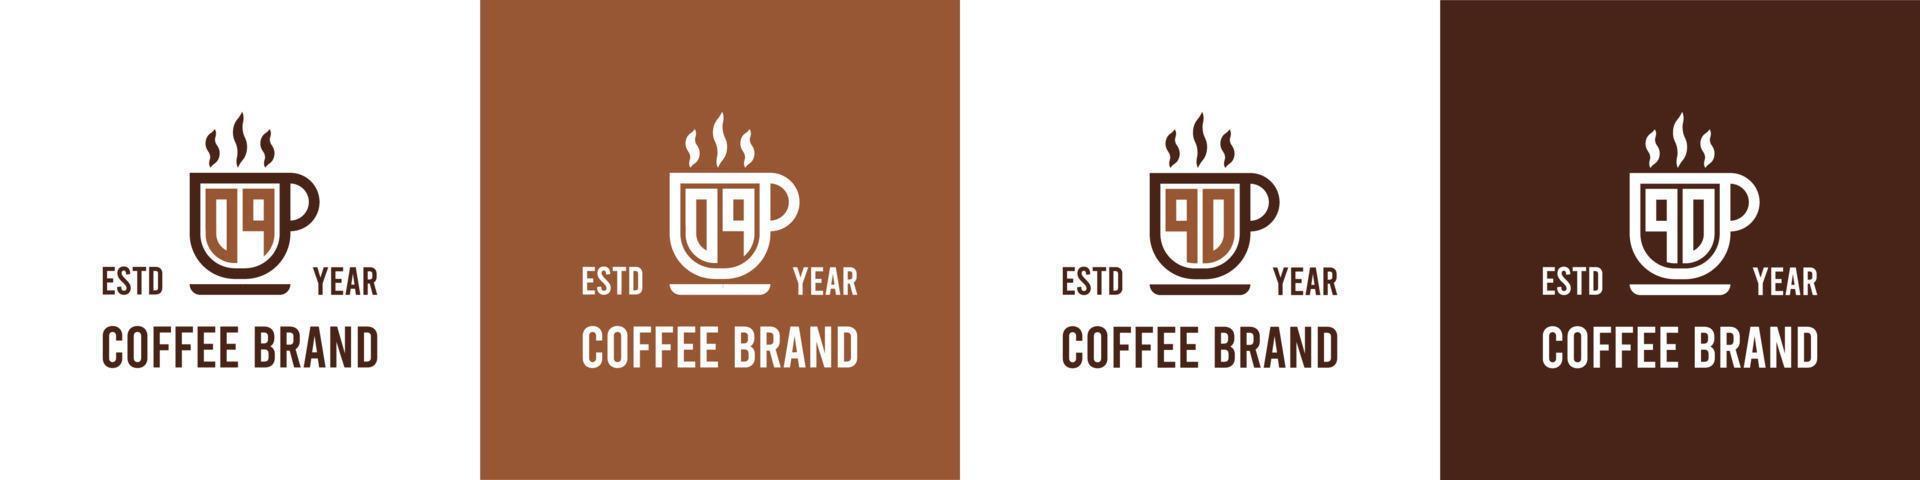 letra oq y qo café logo, adecuado para ninguna negocio relacionado a café, té, o otro con oq o qo iniciales. vector